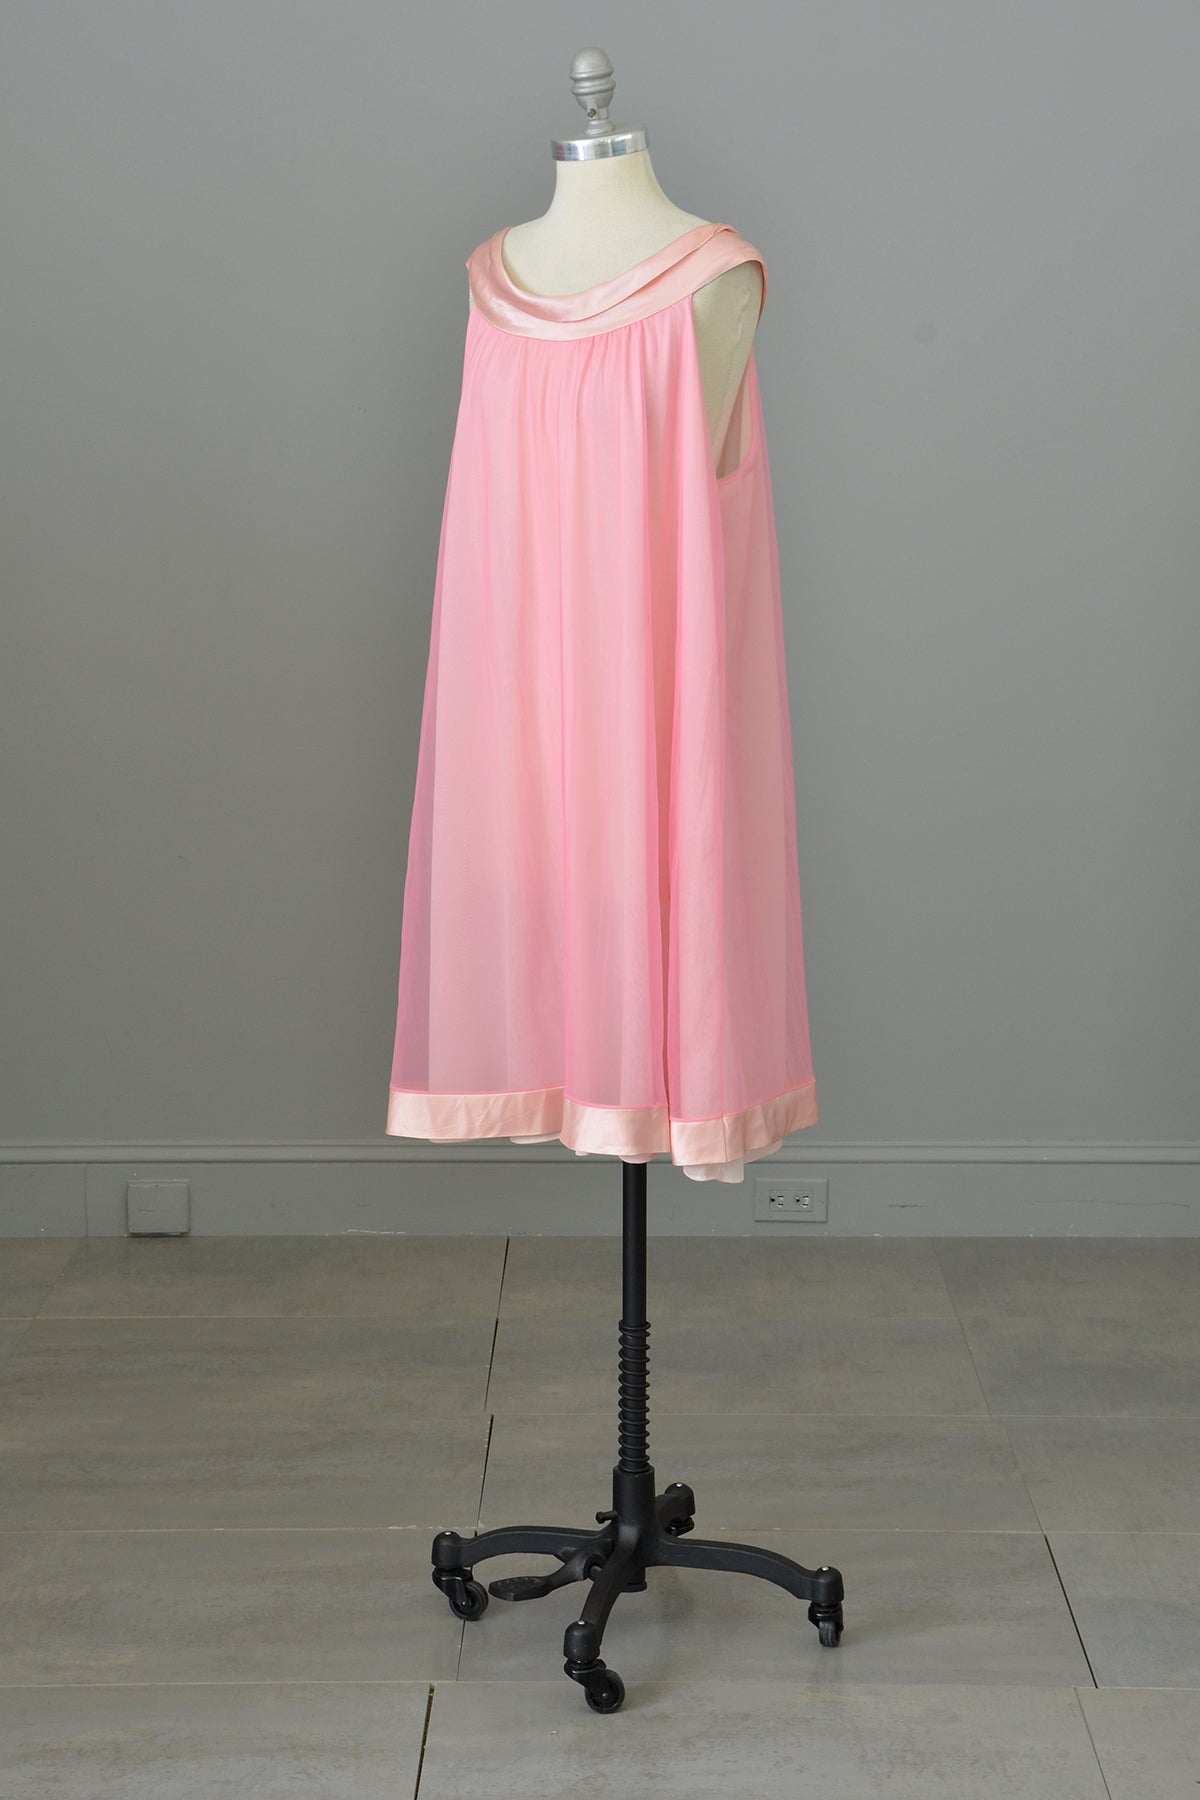 1960s Mod Hot Pink Nightie with Satin Drape